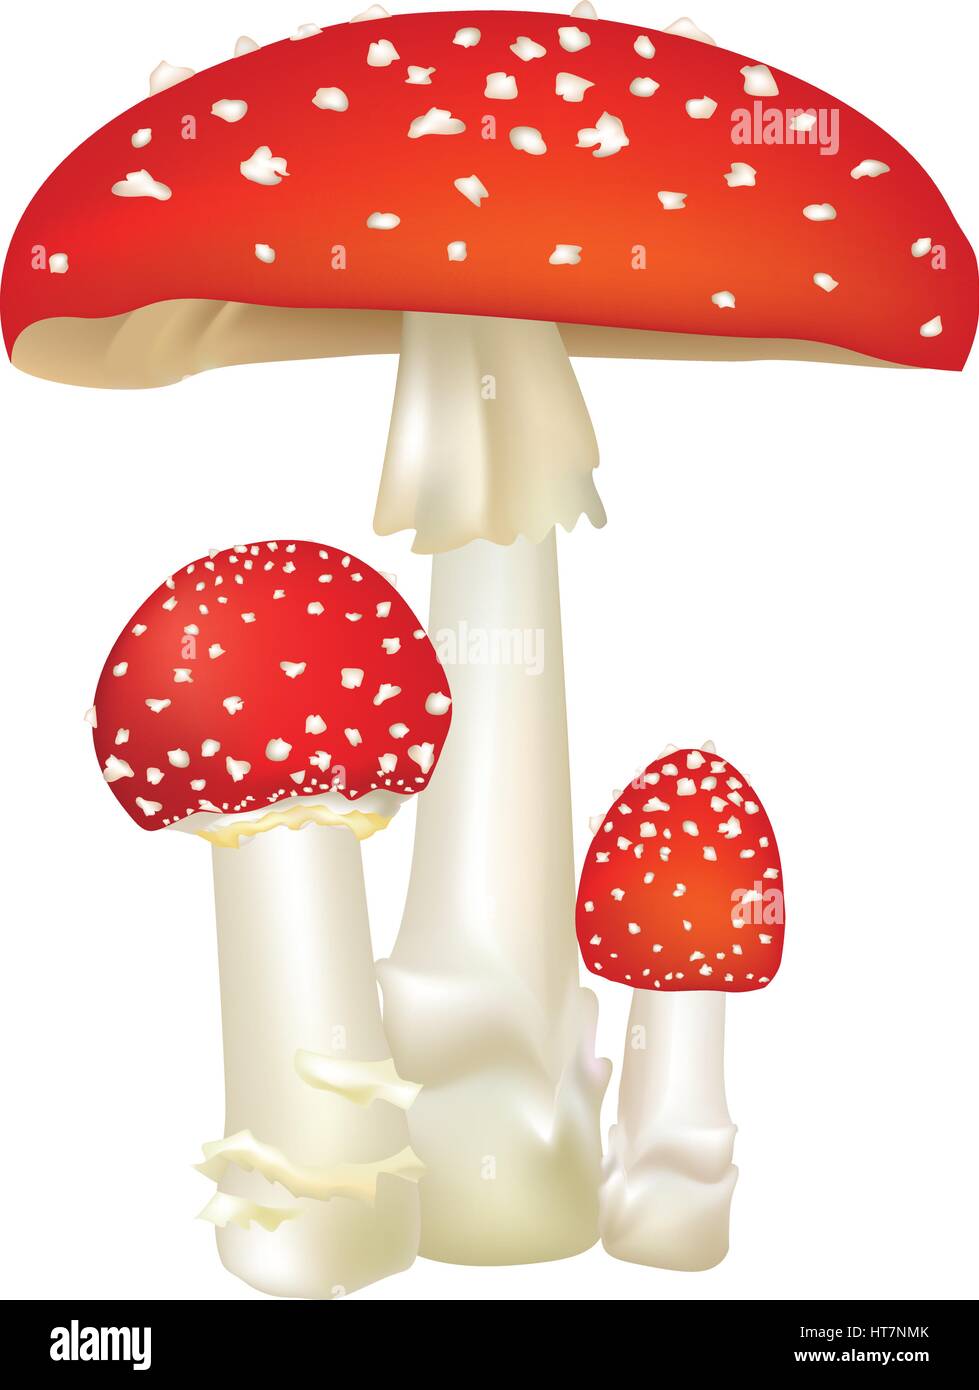 Red poison mushroom isolated on white background. Vector illustration set. Stock Vector